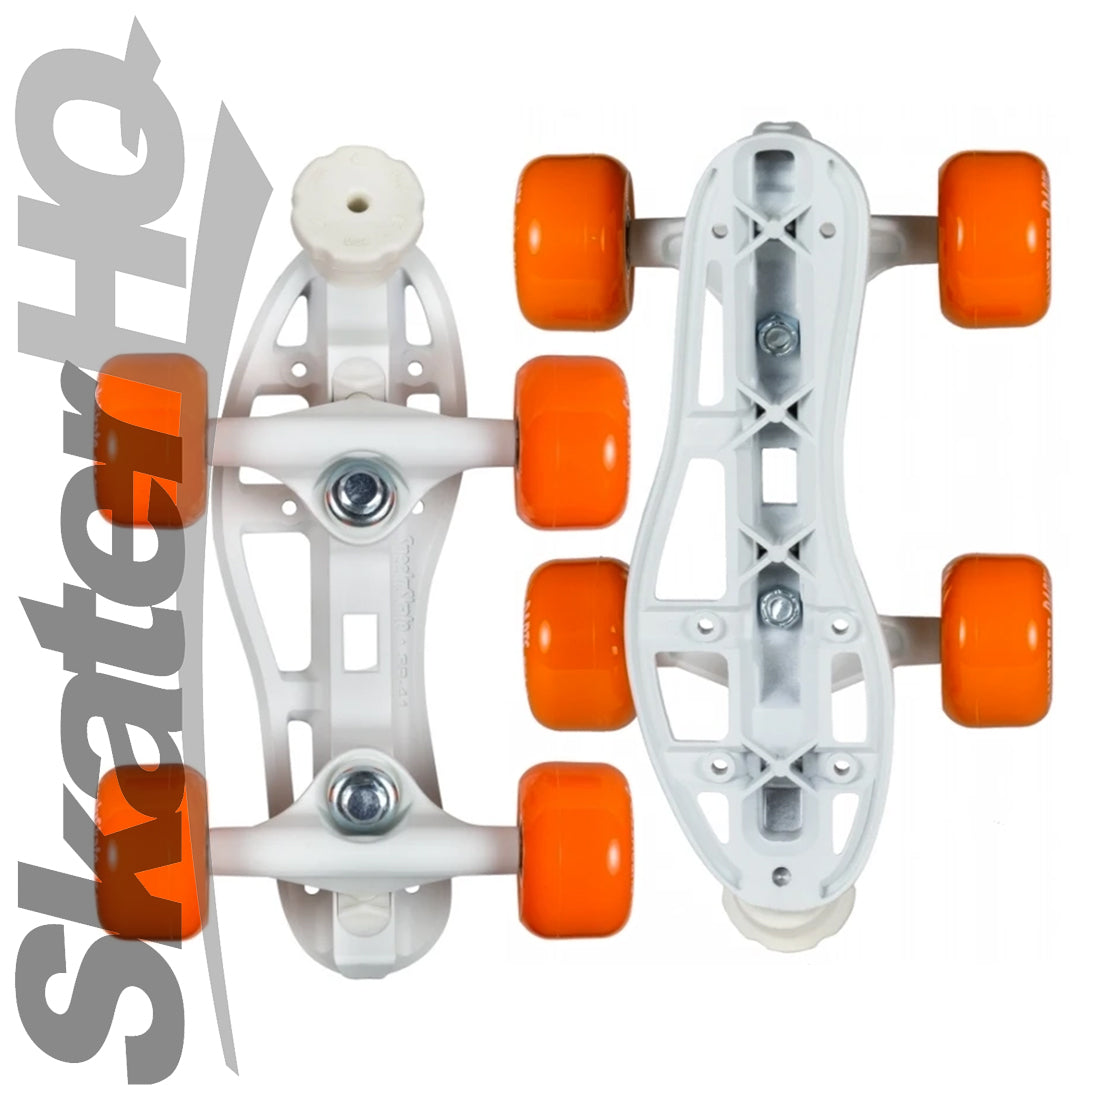 Chaya SneekrSkate DLX EU36-38 Roller Skate Plates